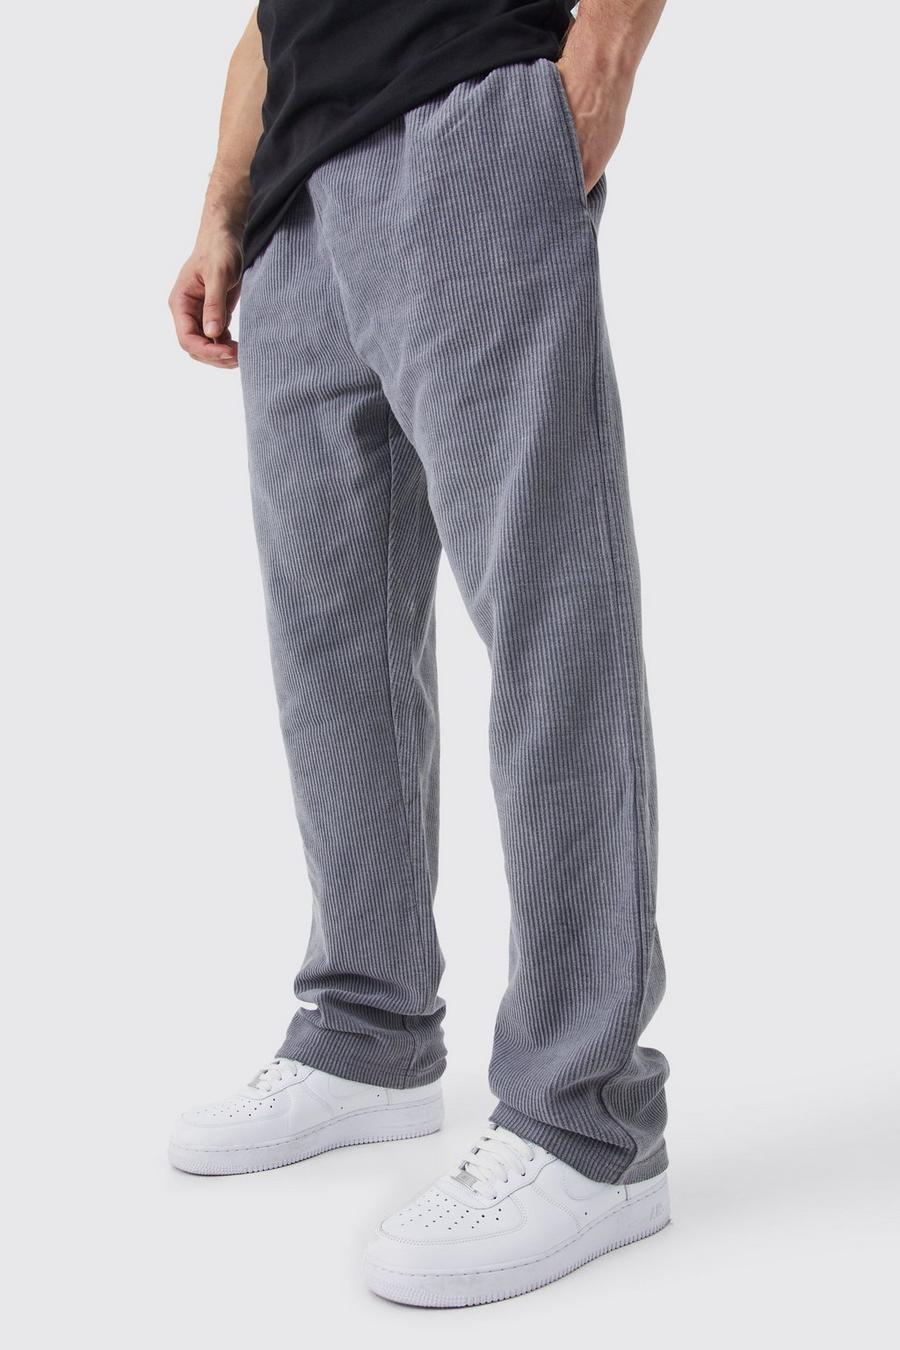 Pantaloni tuta Tall in velluto a coste Regular Fit slavato, Charcoal